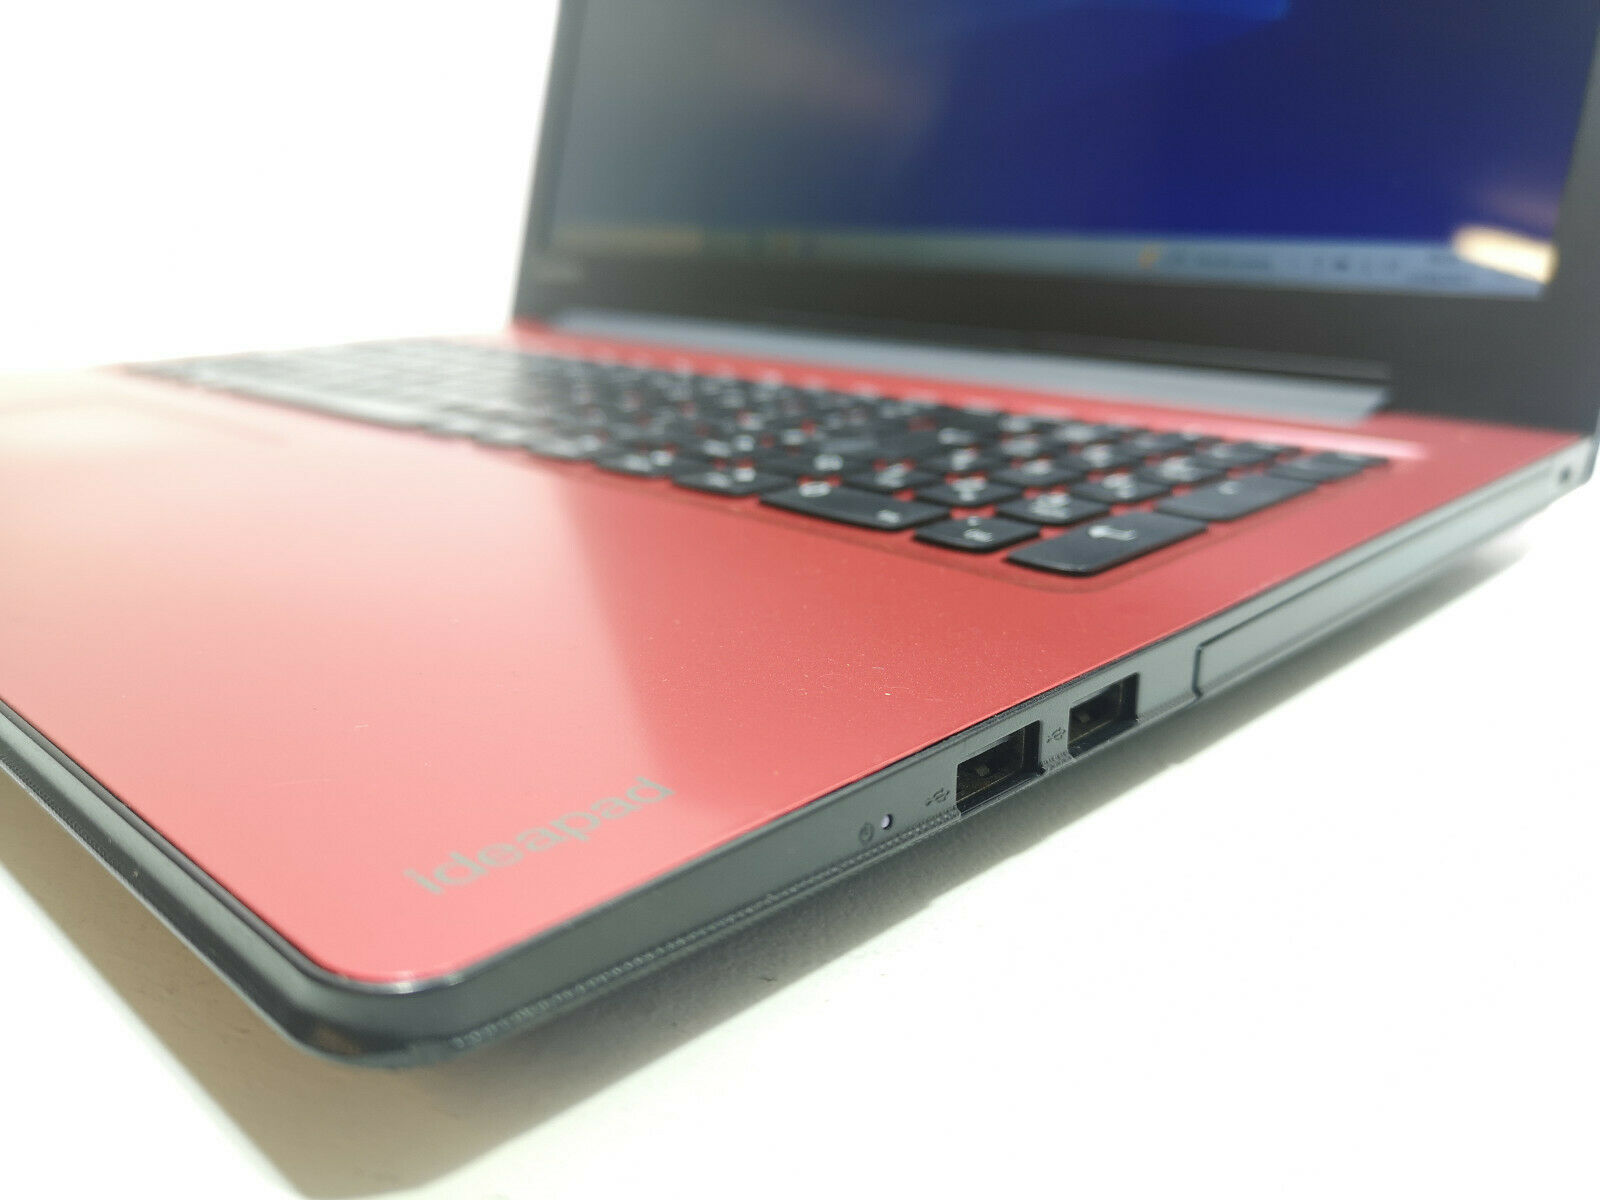 Refurbished Lenovo IdeaPad 310 Laptop PC